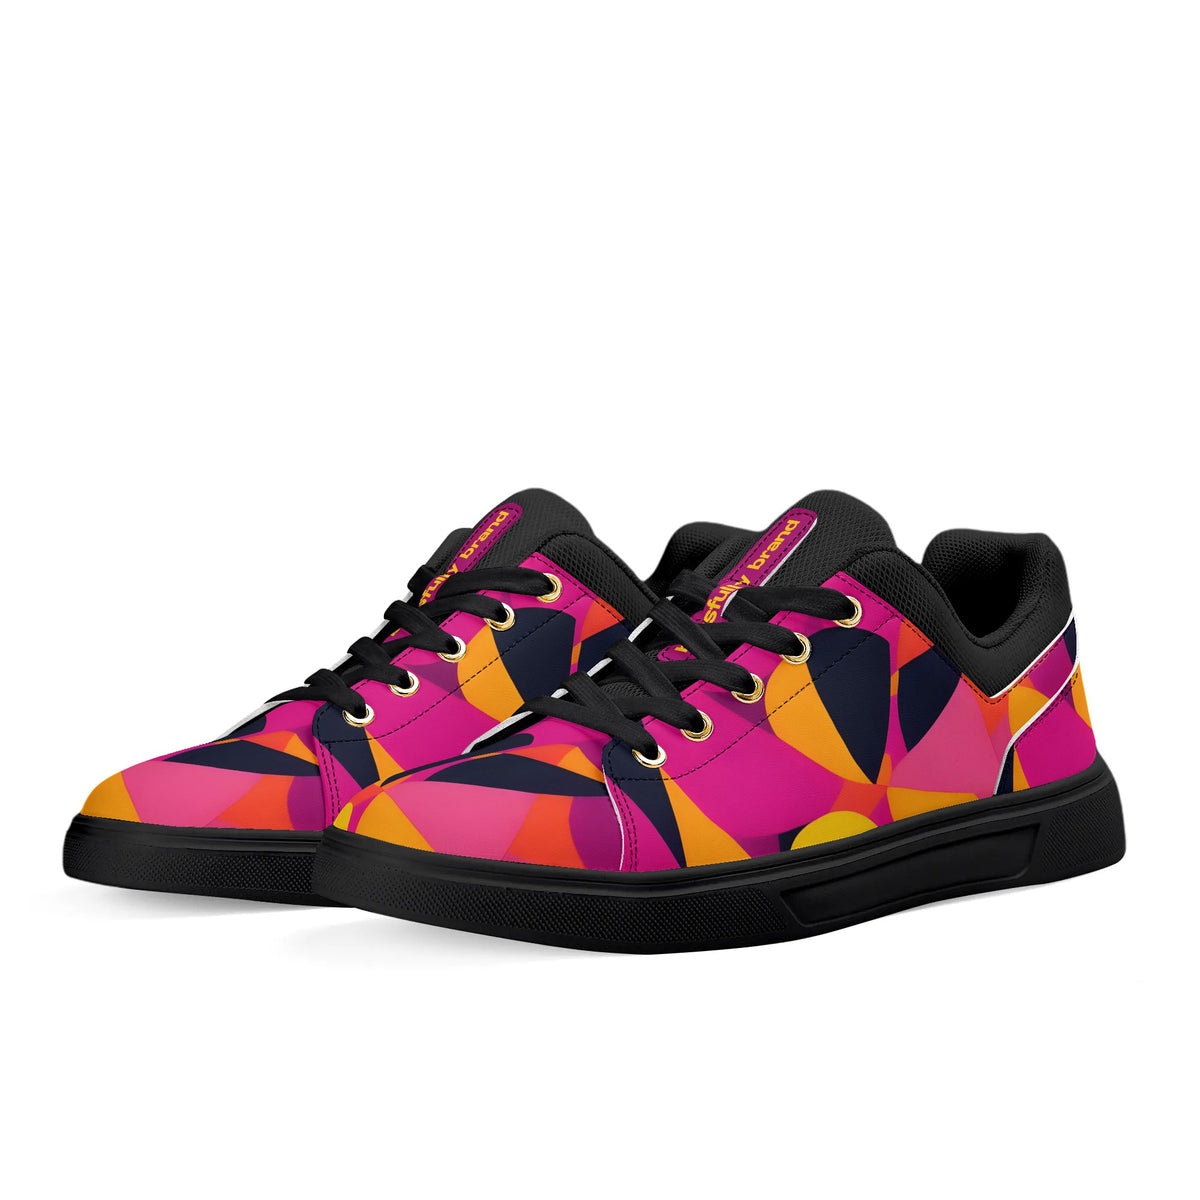 Geometric pattern women's shoes bold fashion Trendy urban sneakers street style blissfully brand